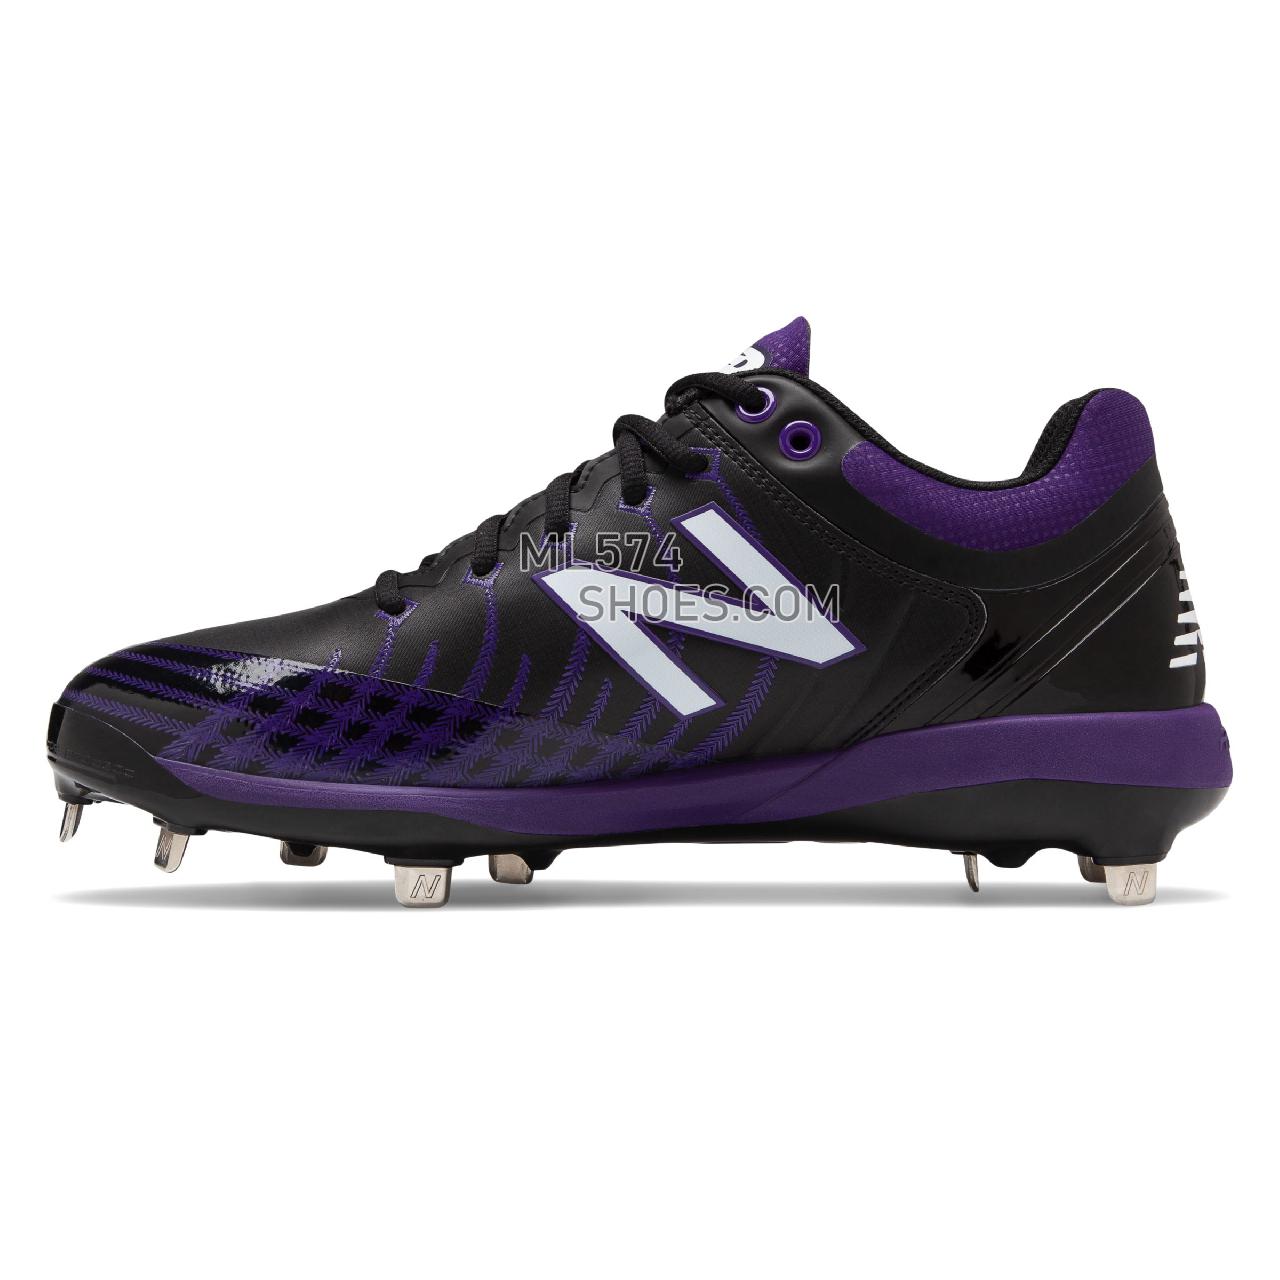 New Balance 4040v5 Metal - Men's Baseball Turf - Black with Purple - L4040BP5